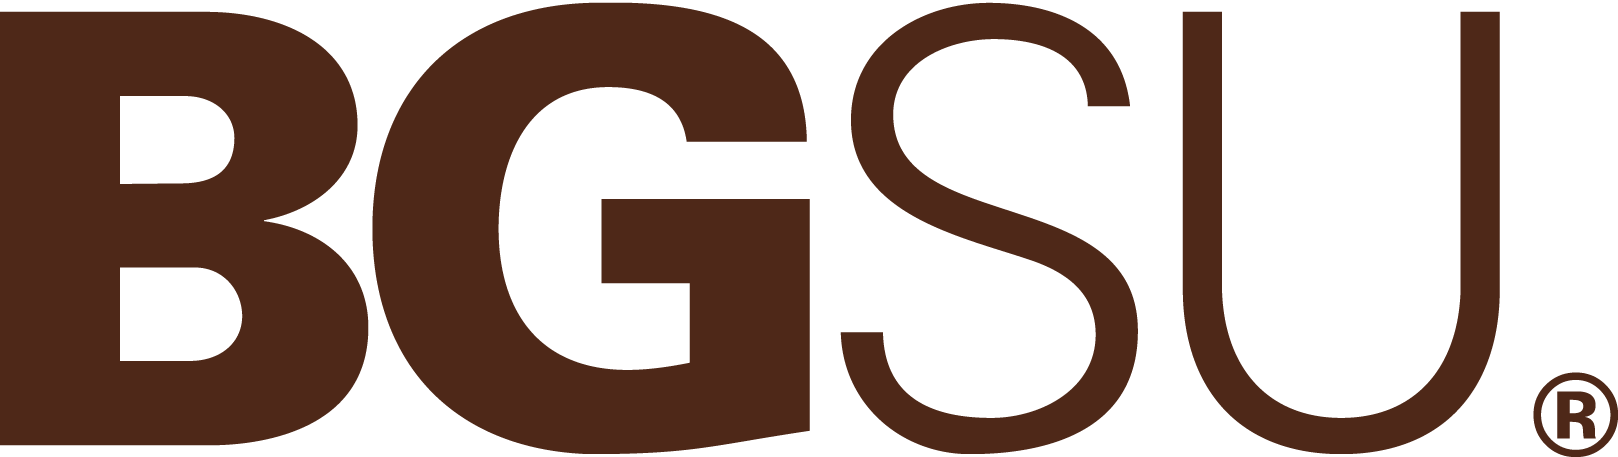 bgsu logo in brown